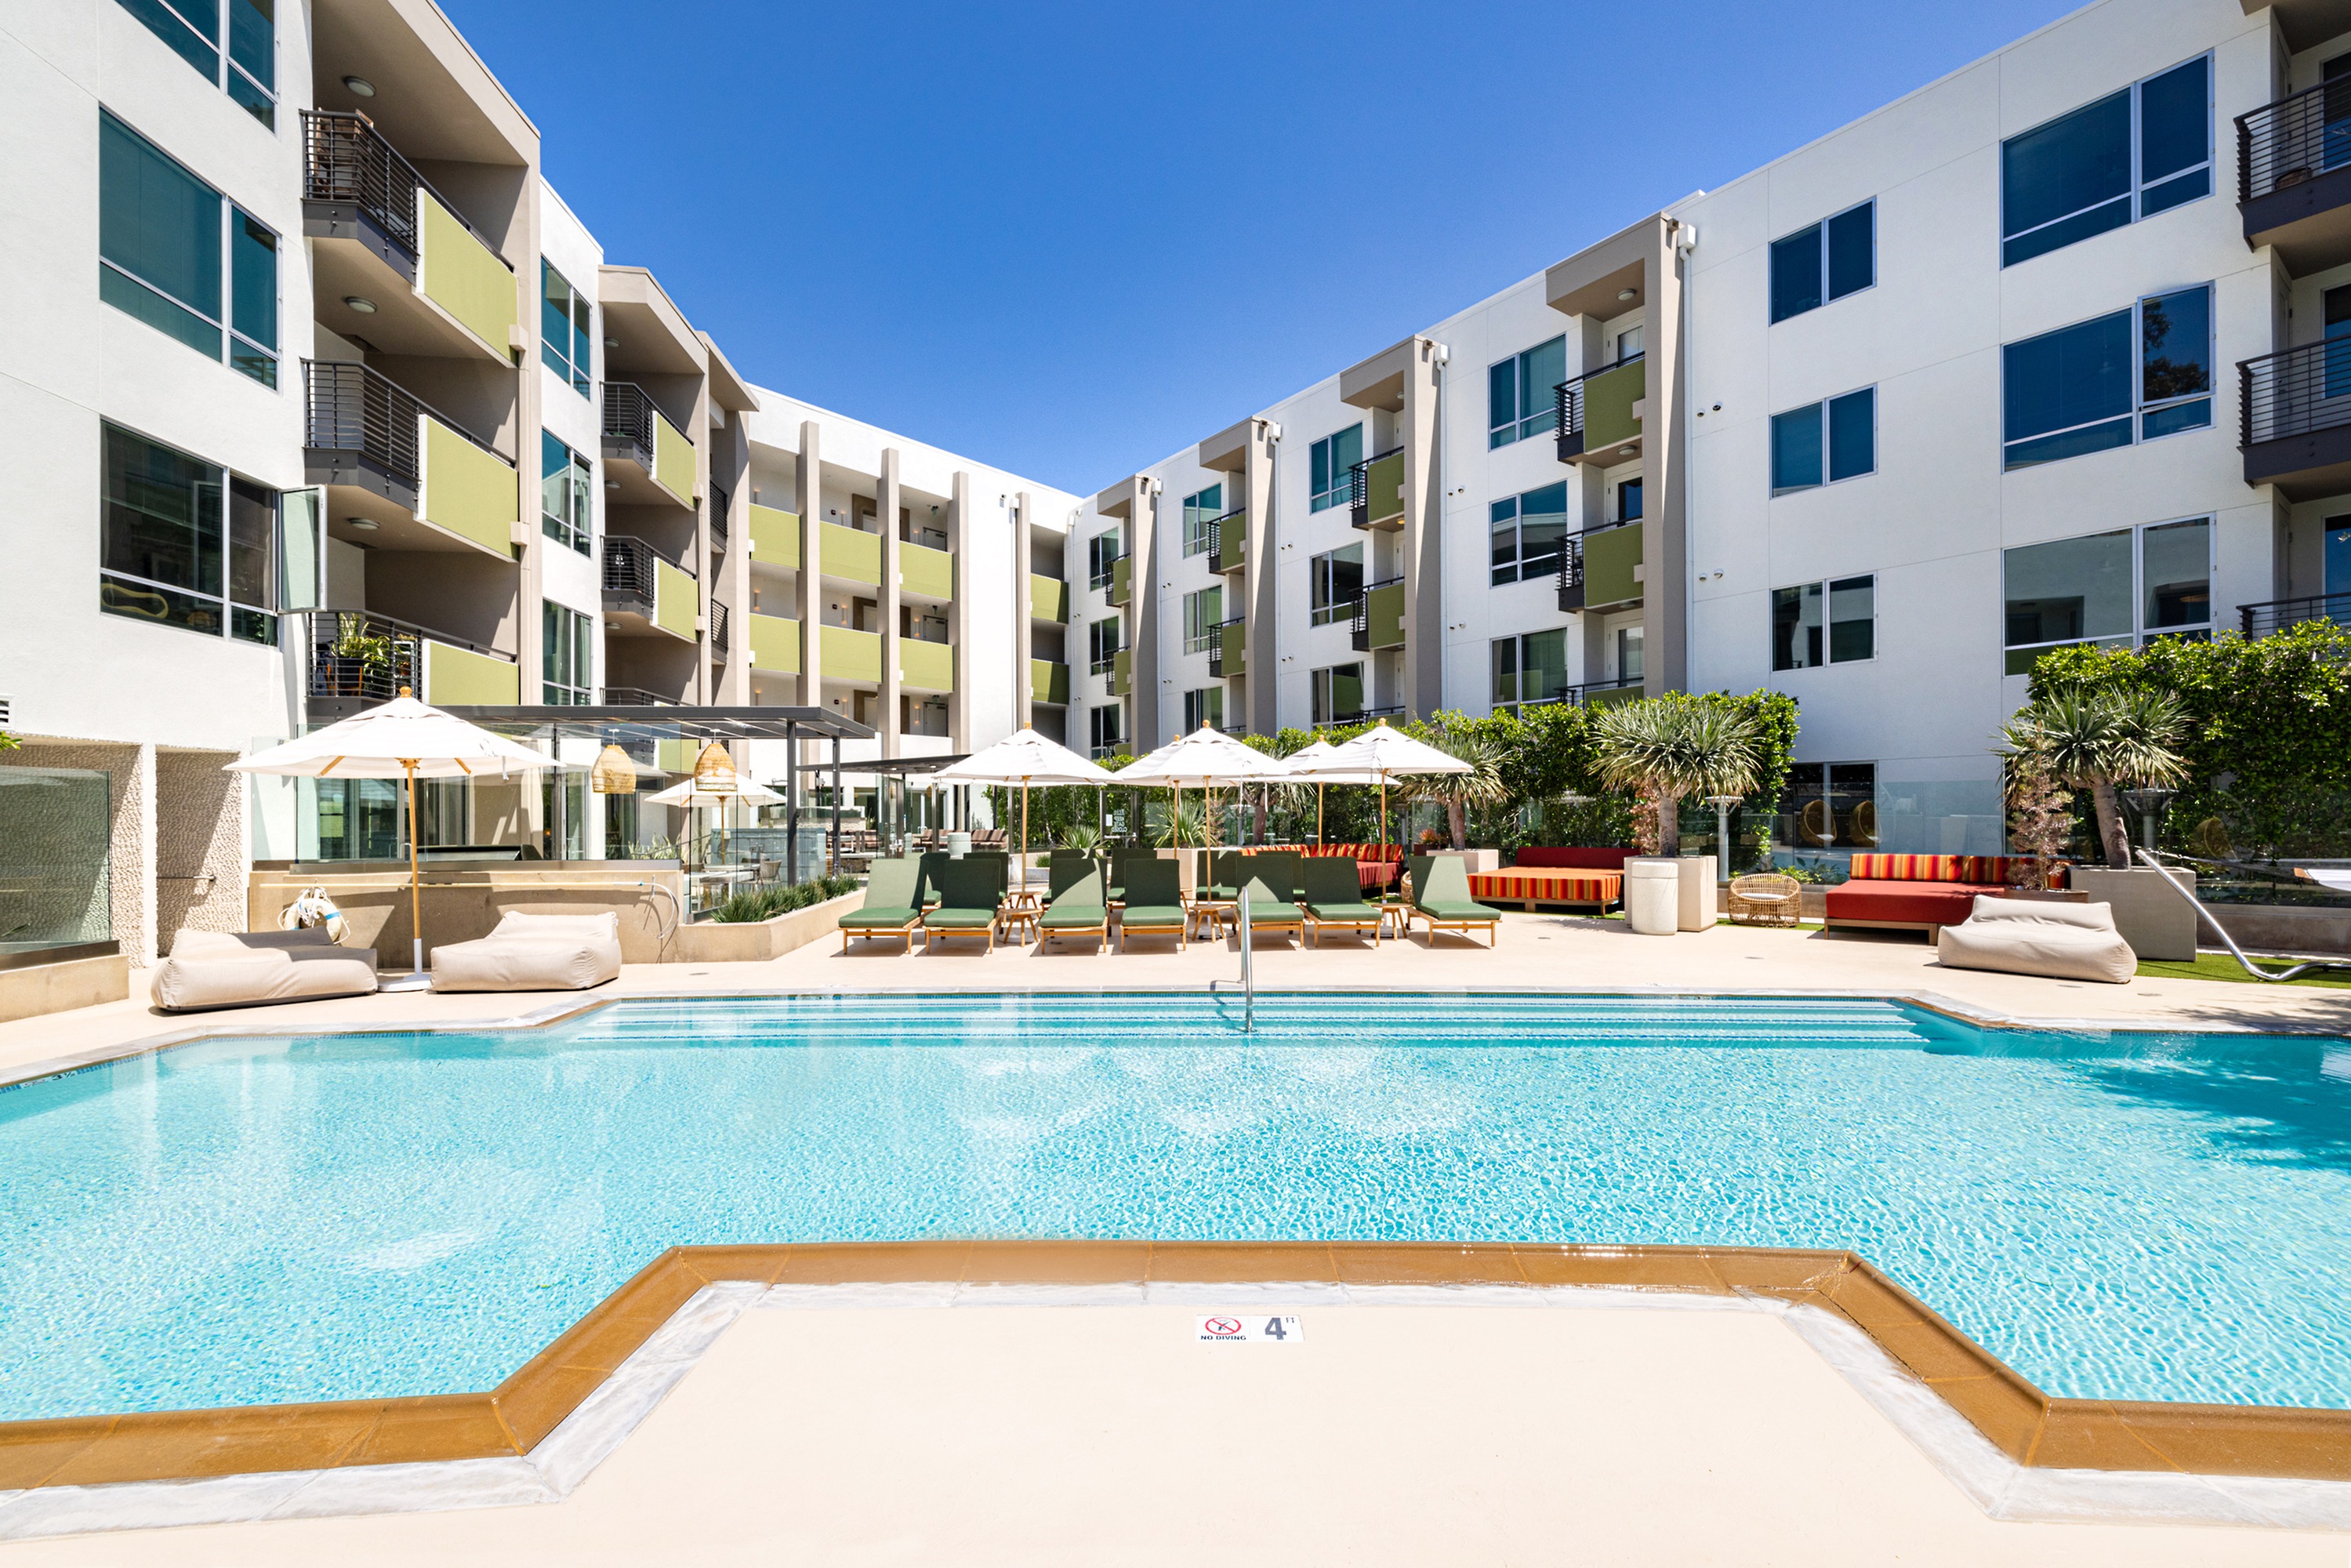 Pool | Brio Apartments | Apartments in Glendale, CA